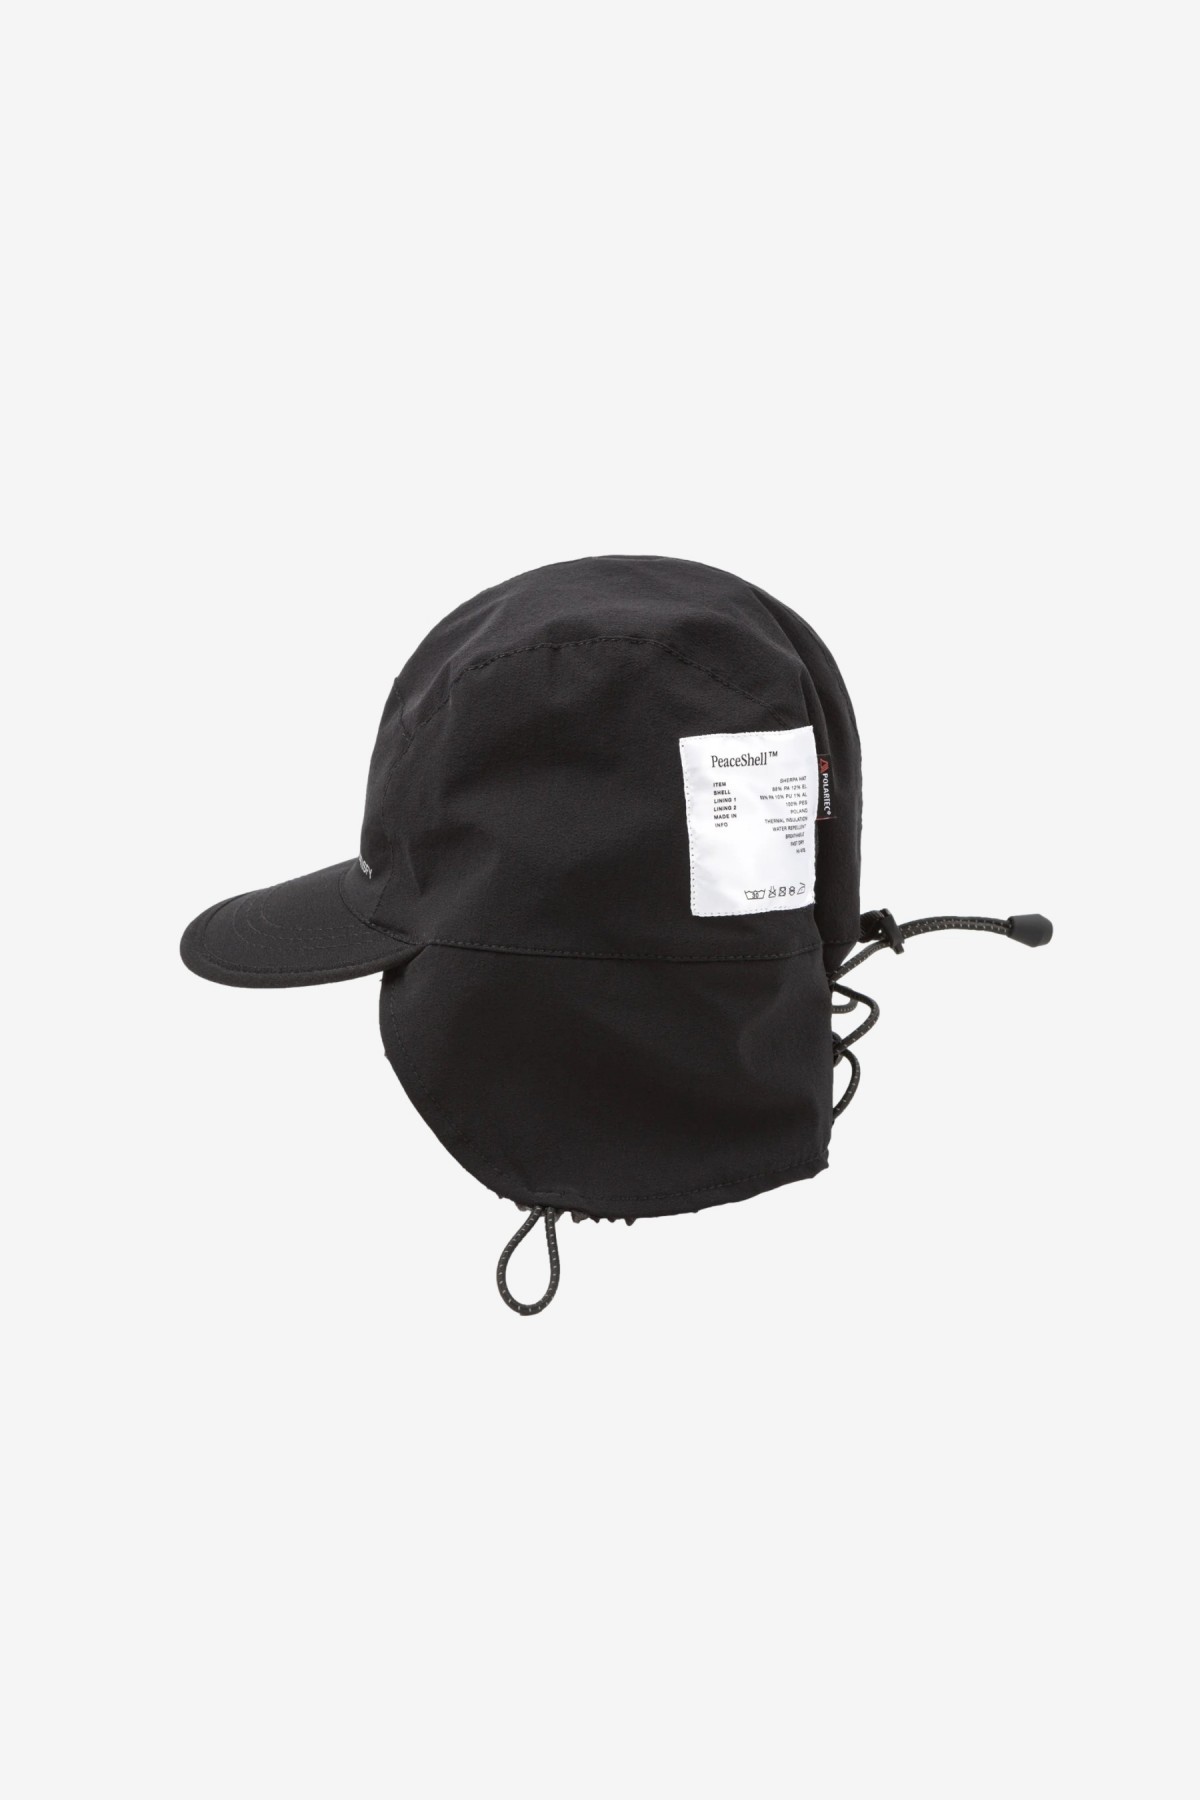 Satisfy Running PeaceShell Sherpa Hat in Black